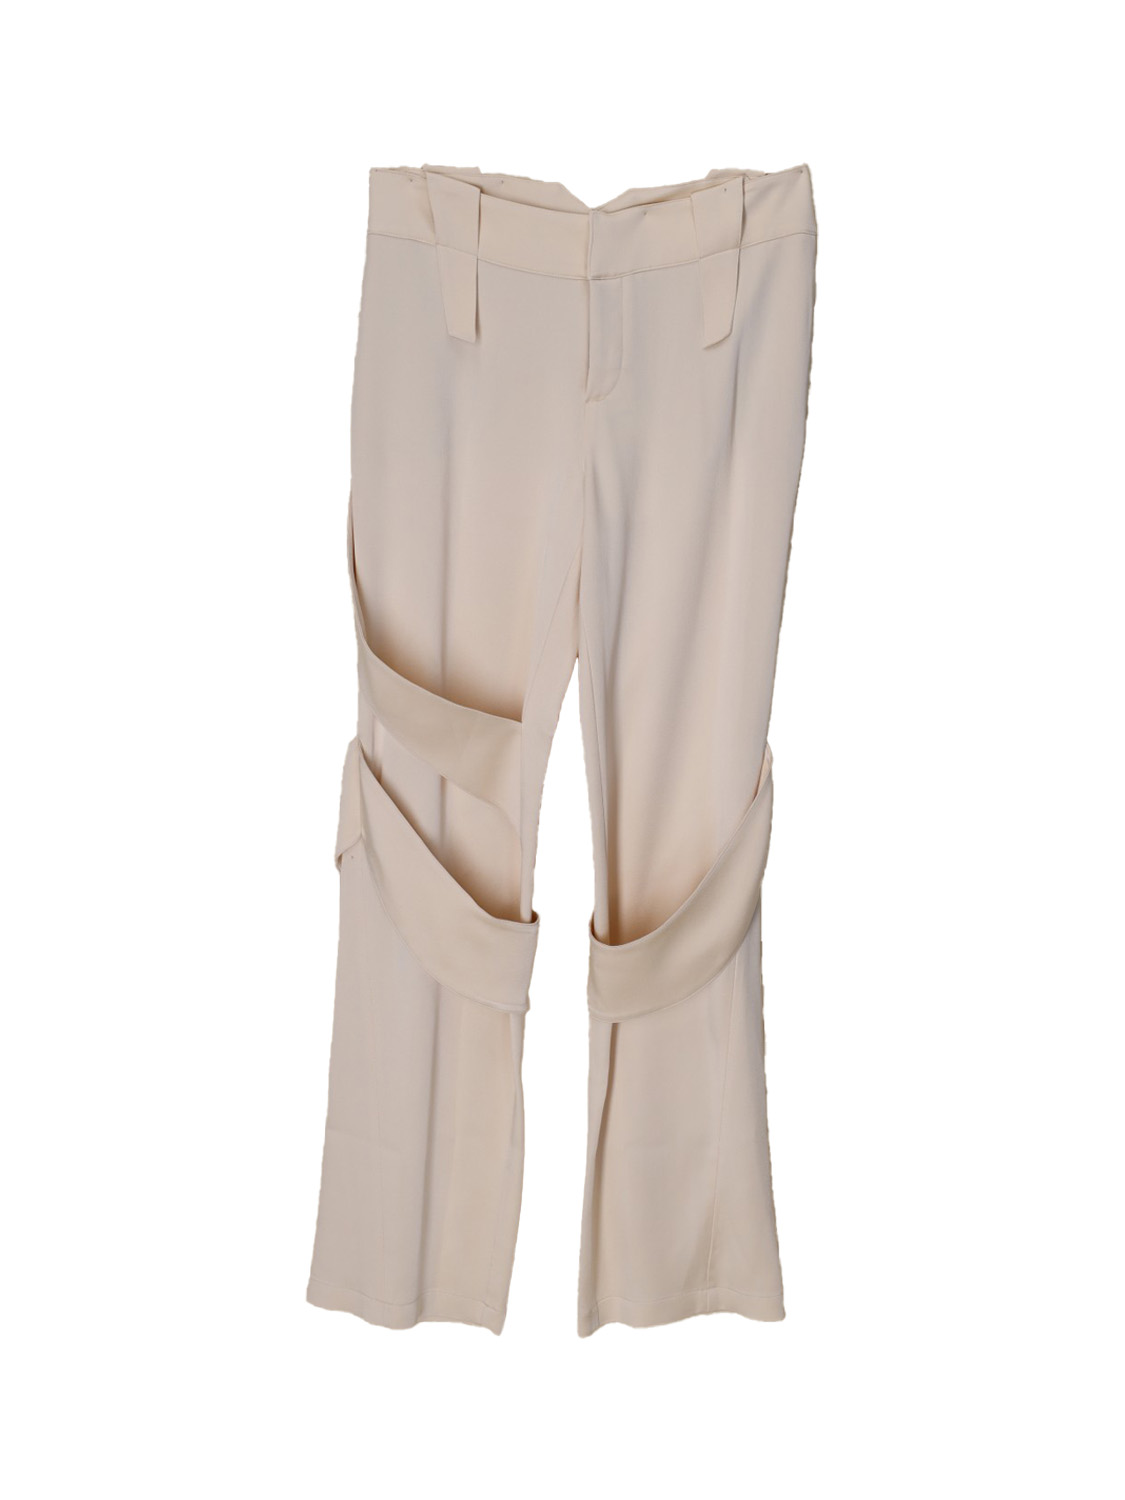 Blumarine Satin pants with layer details  beige 34